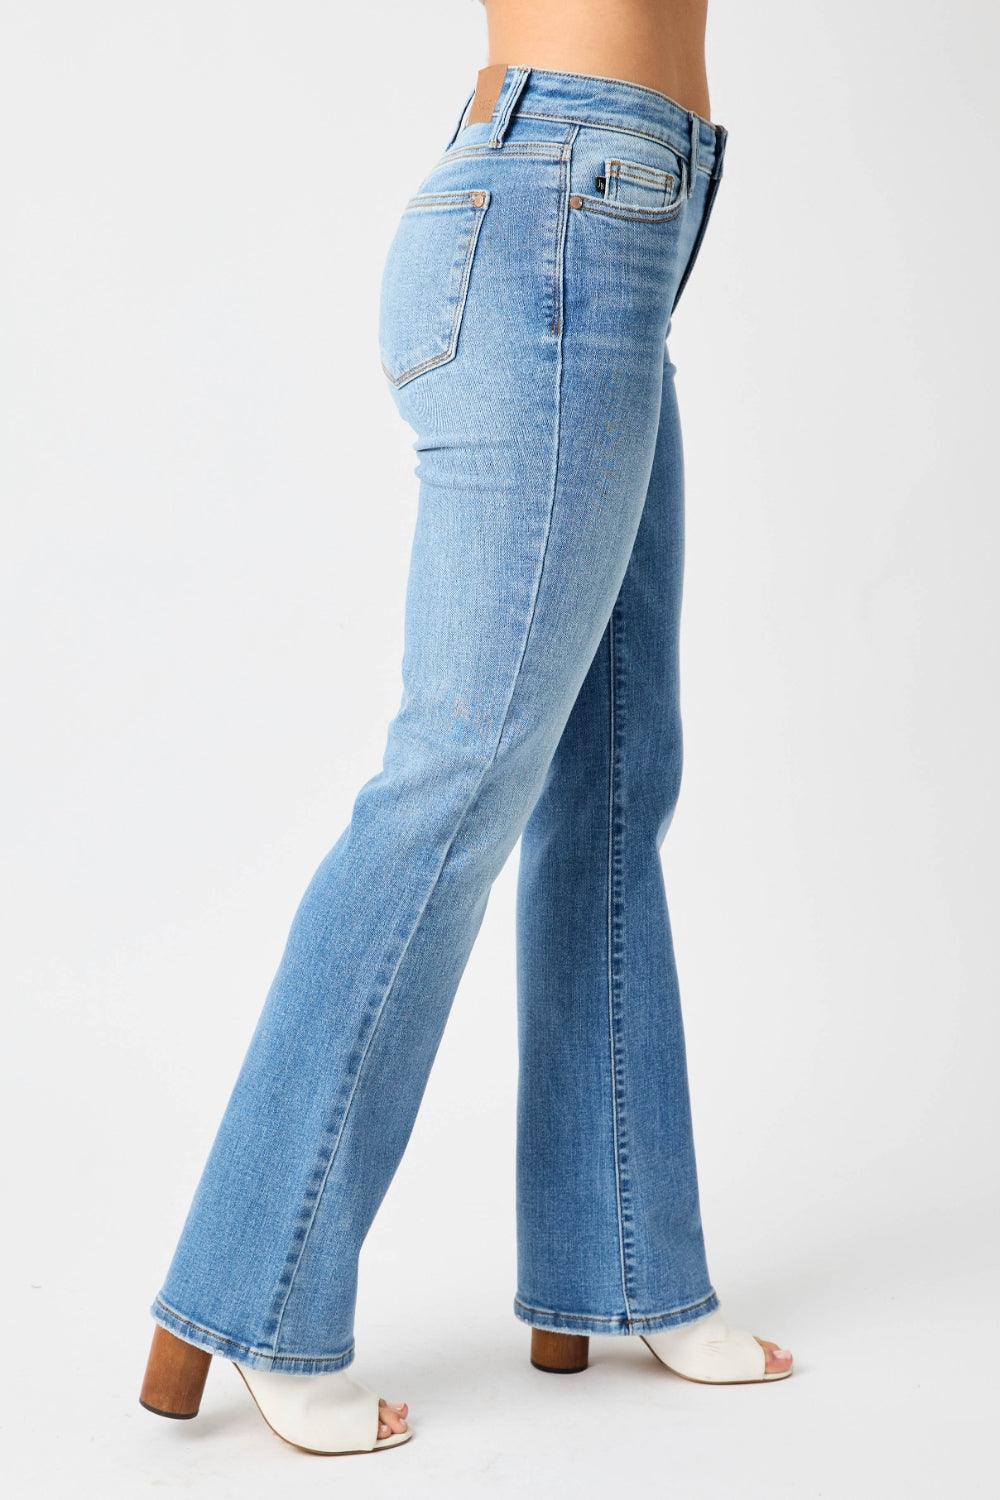 Judy Blue Full Size High Waist Straight Jeans - Wildflower Hippies